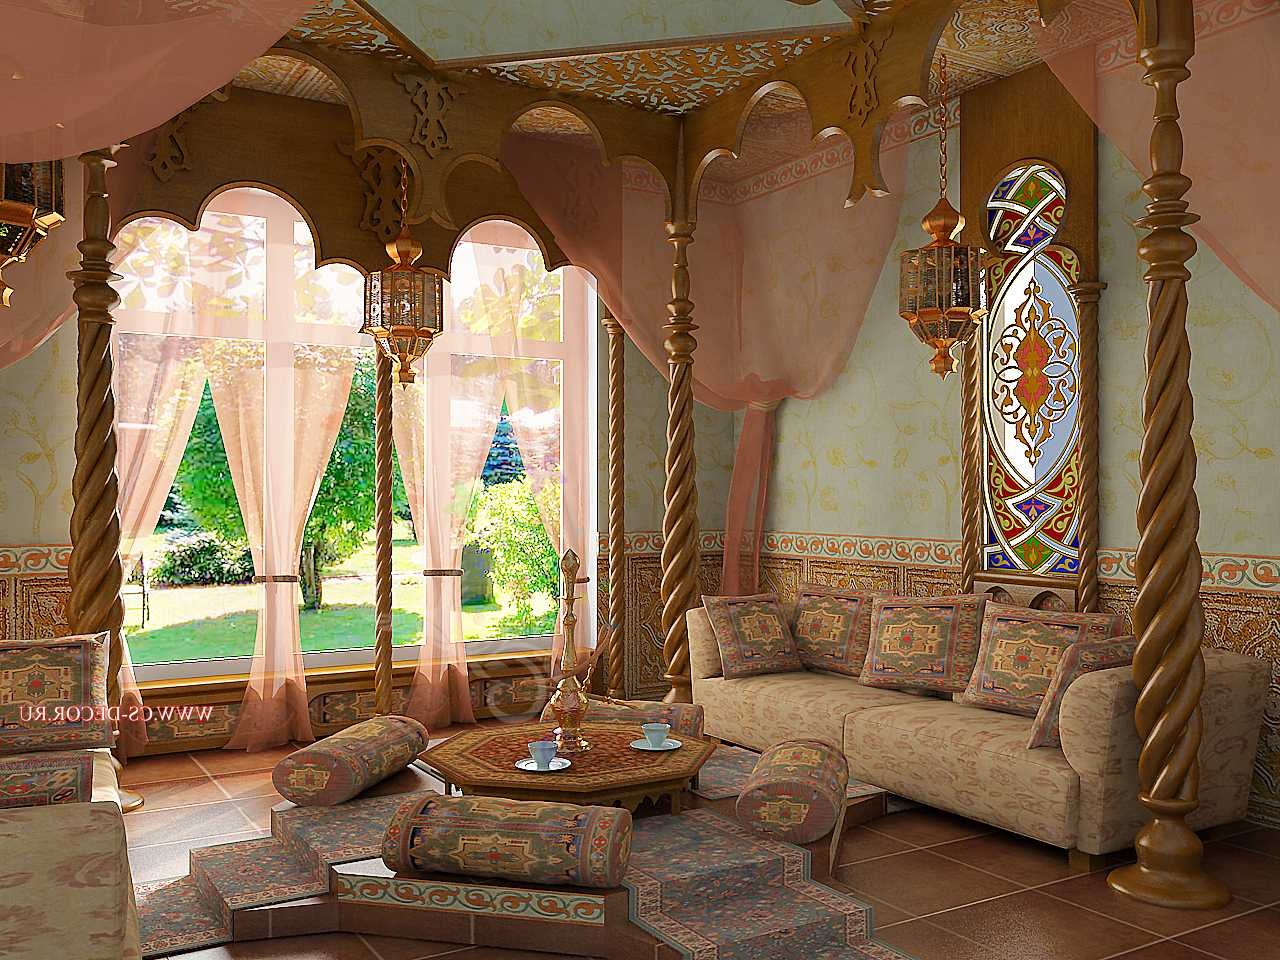 Узбекский салон. Мавританский стиль интерьер 9 век. Арабский Шик интерьер. Мавританский стиль стиль интерьер квартиры. Марокко Капитолий марокканский стиль.